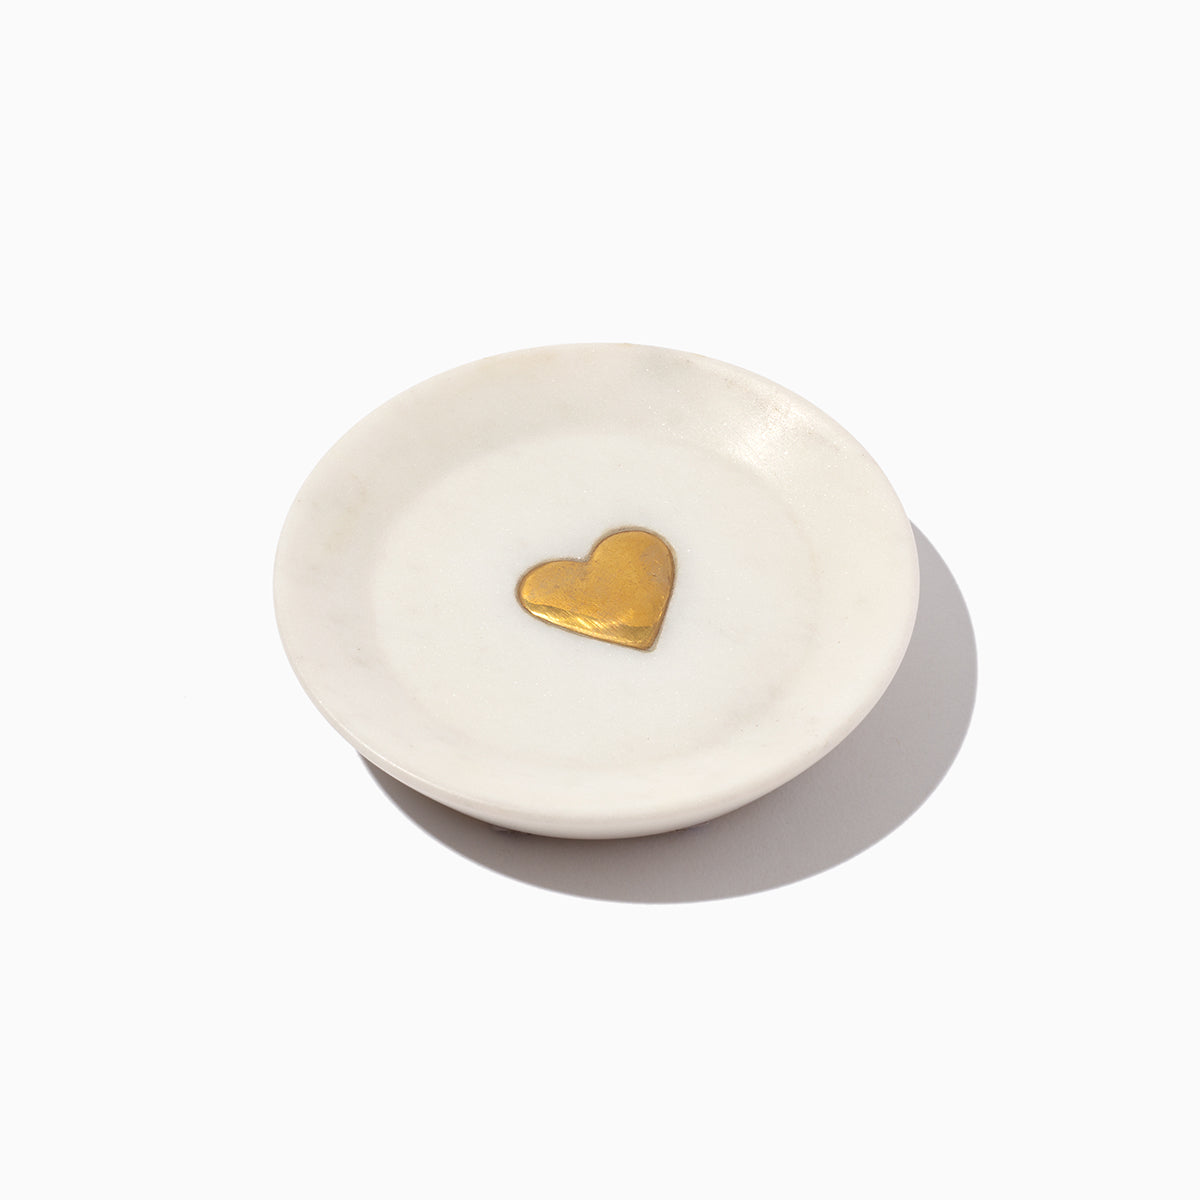 Heart Jewelry Dish | Product Image | Uncommon Lifestyle